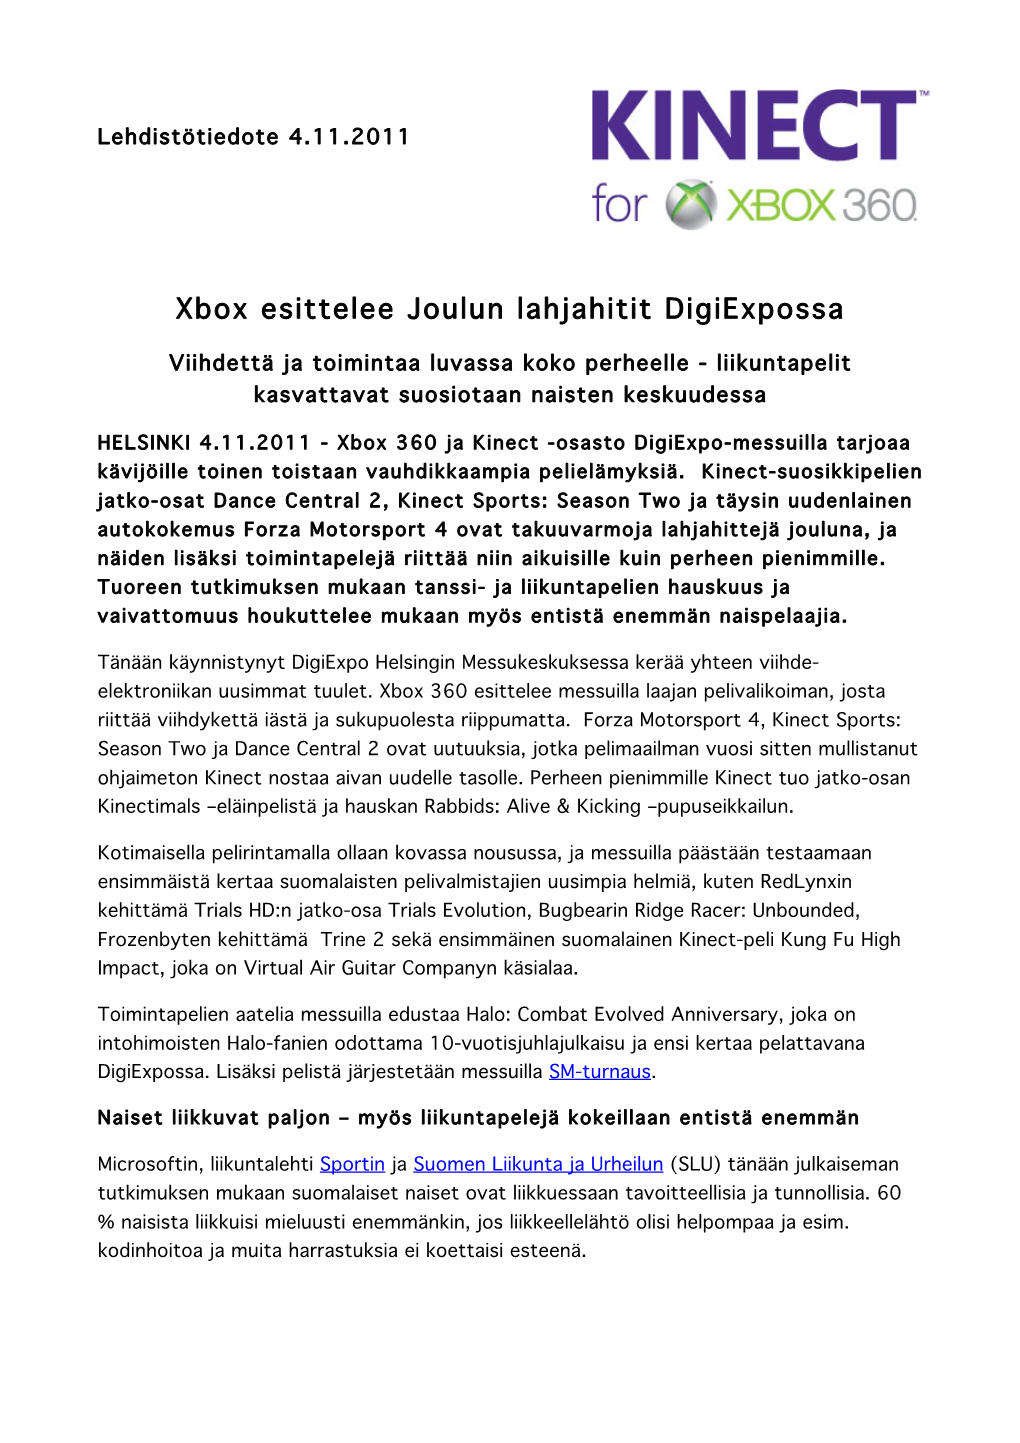 Xbox Esittelee Joulun Lahjahitit Digiexpossa